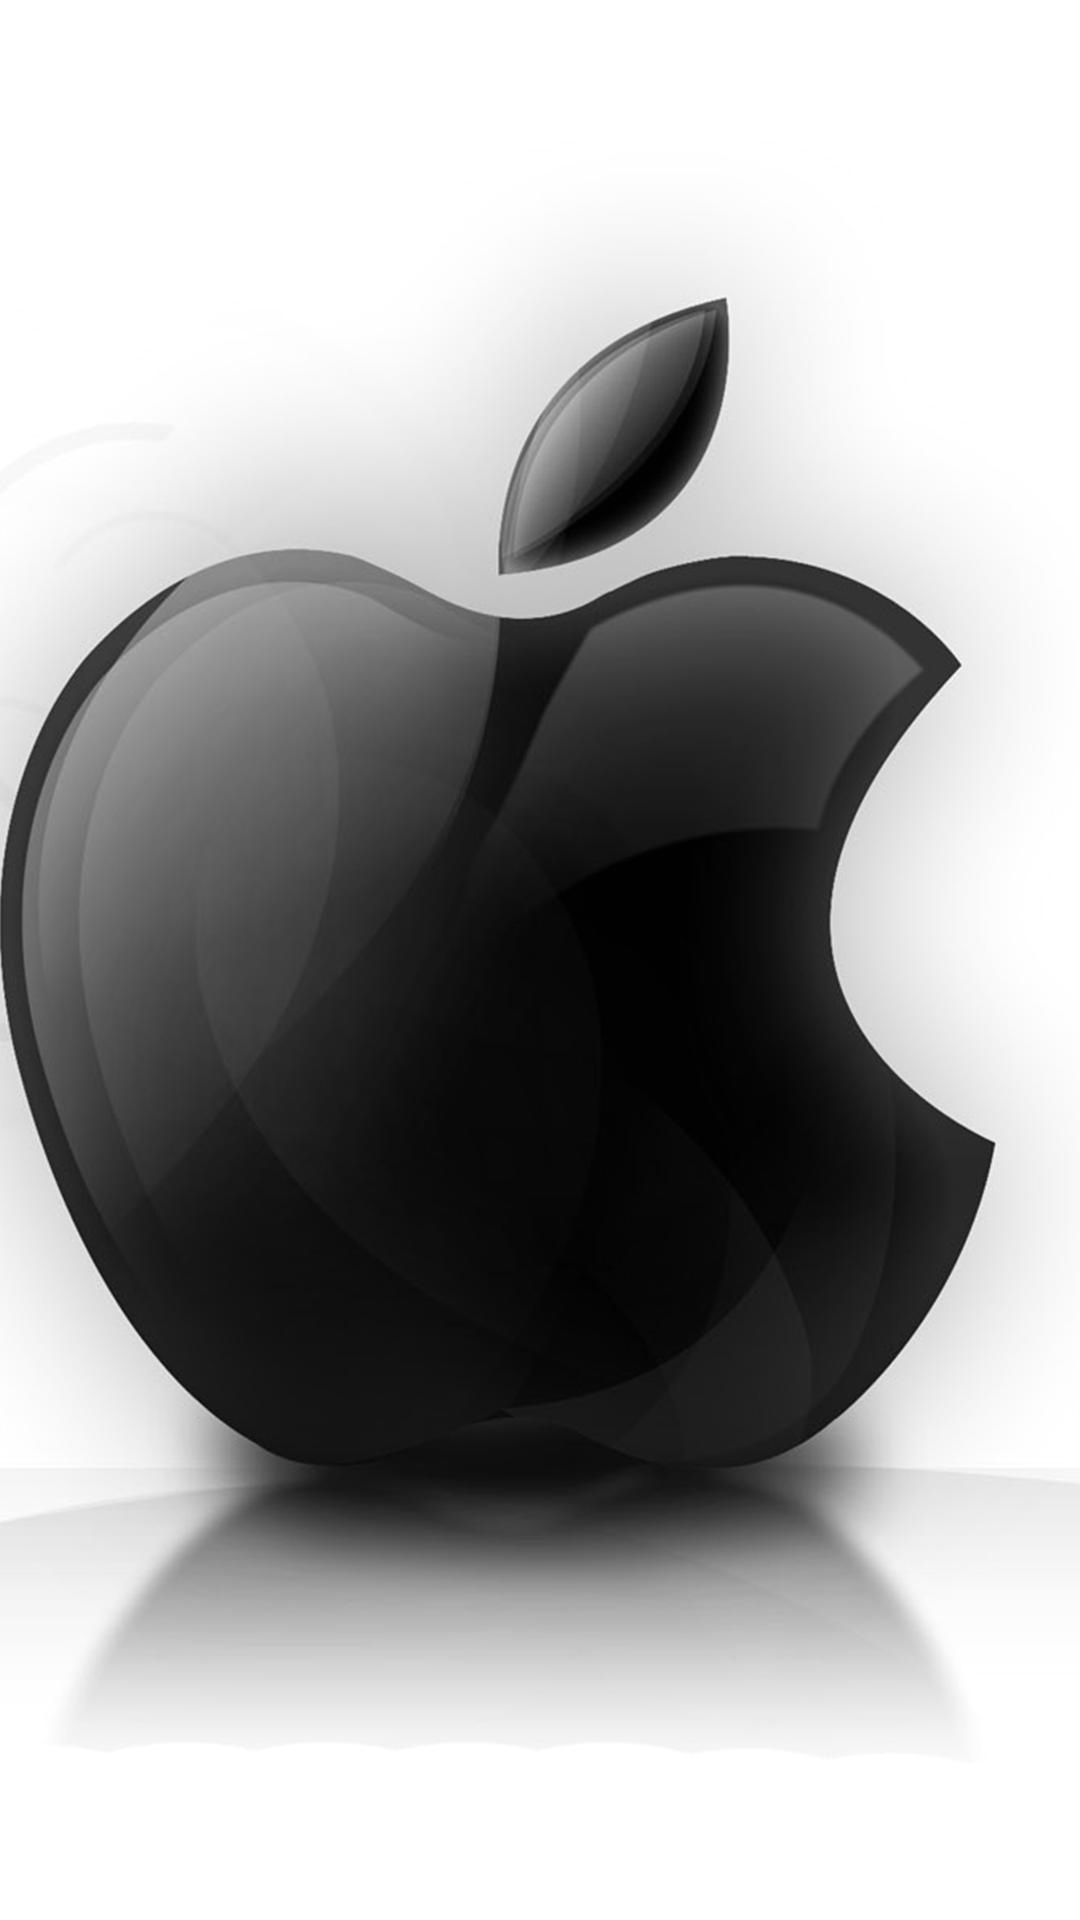 Apple iPhone 6s Wallpaper resolution 1080x1920